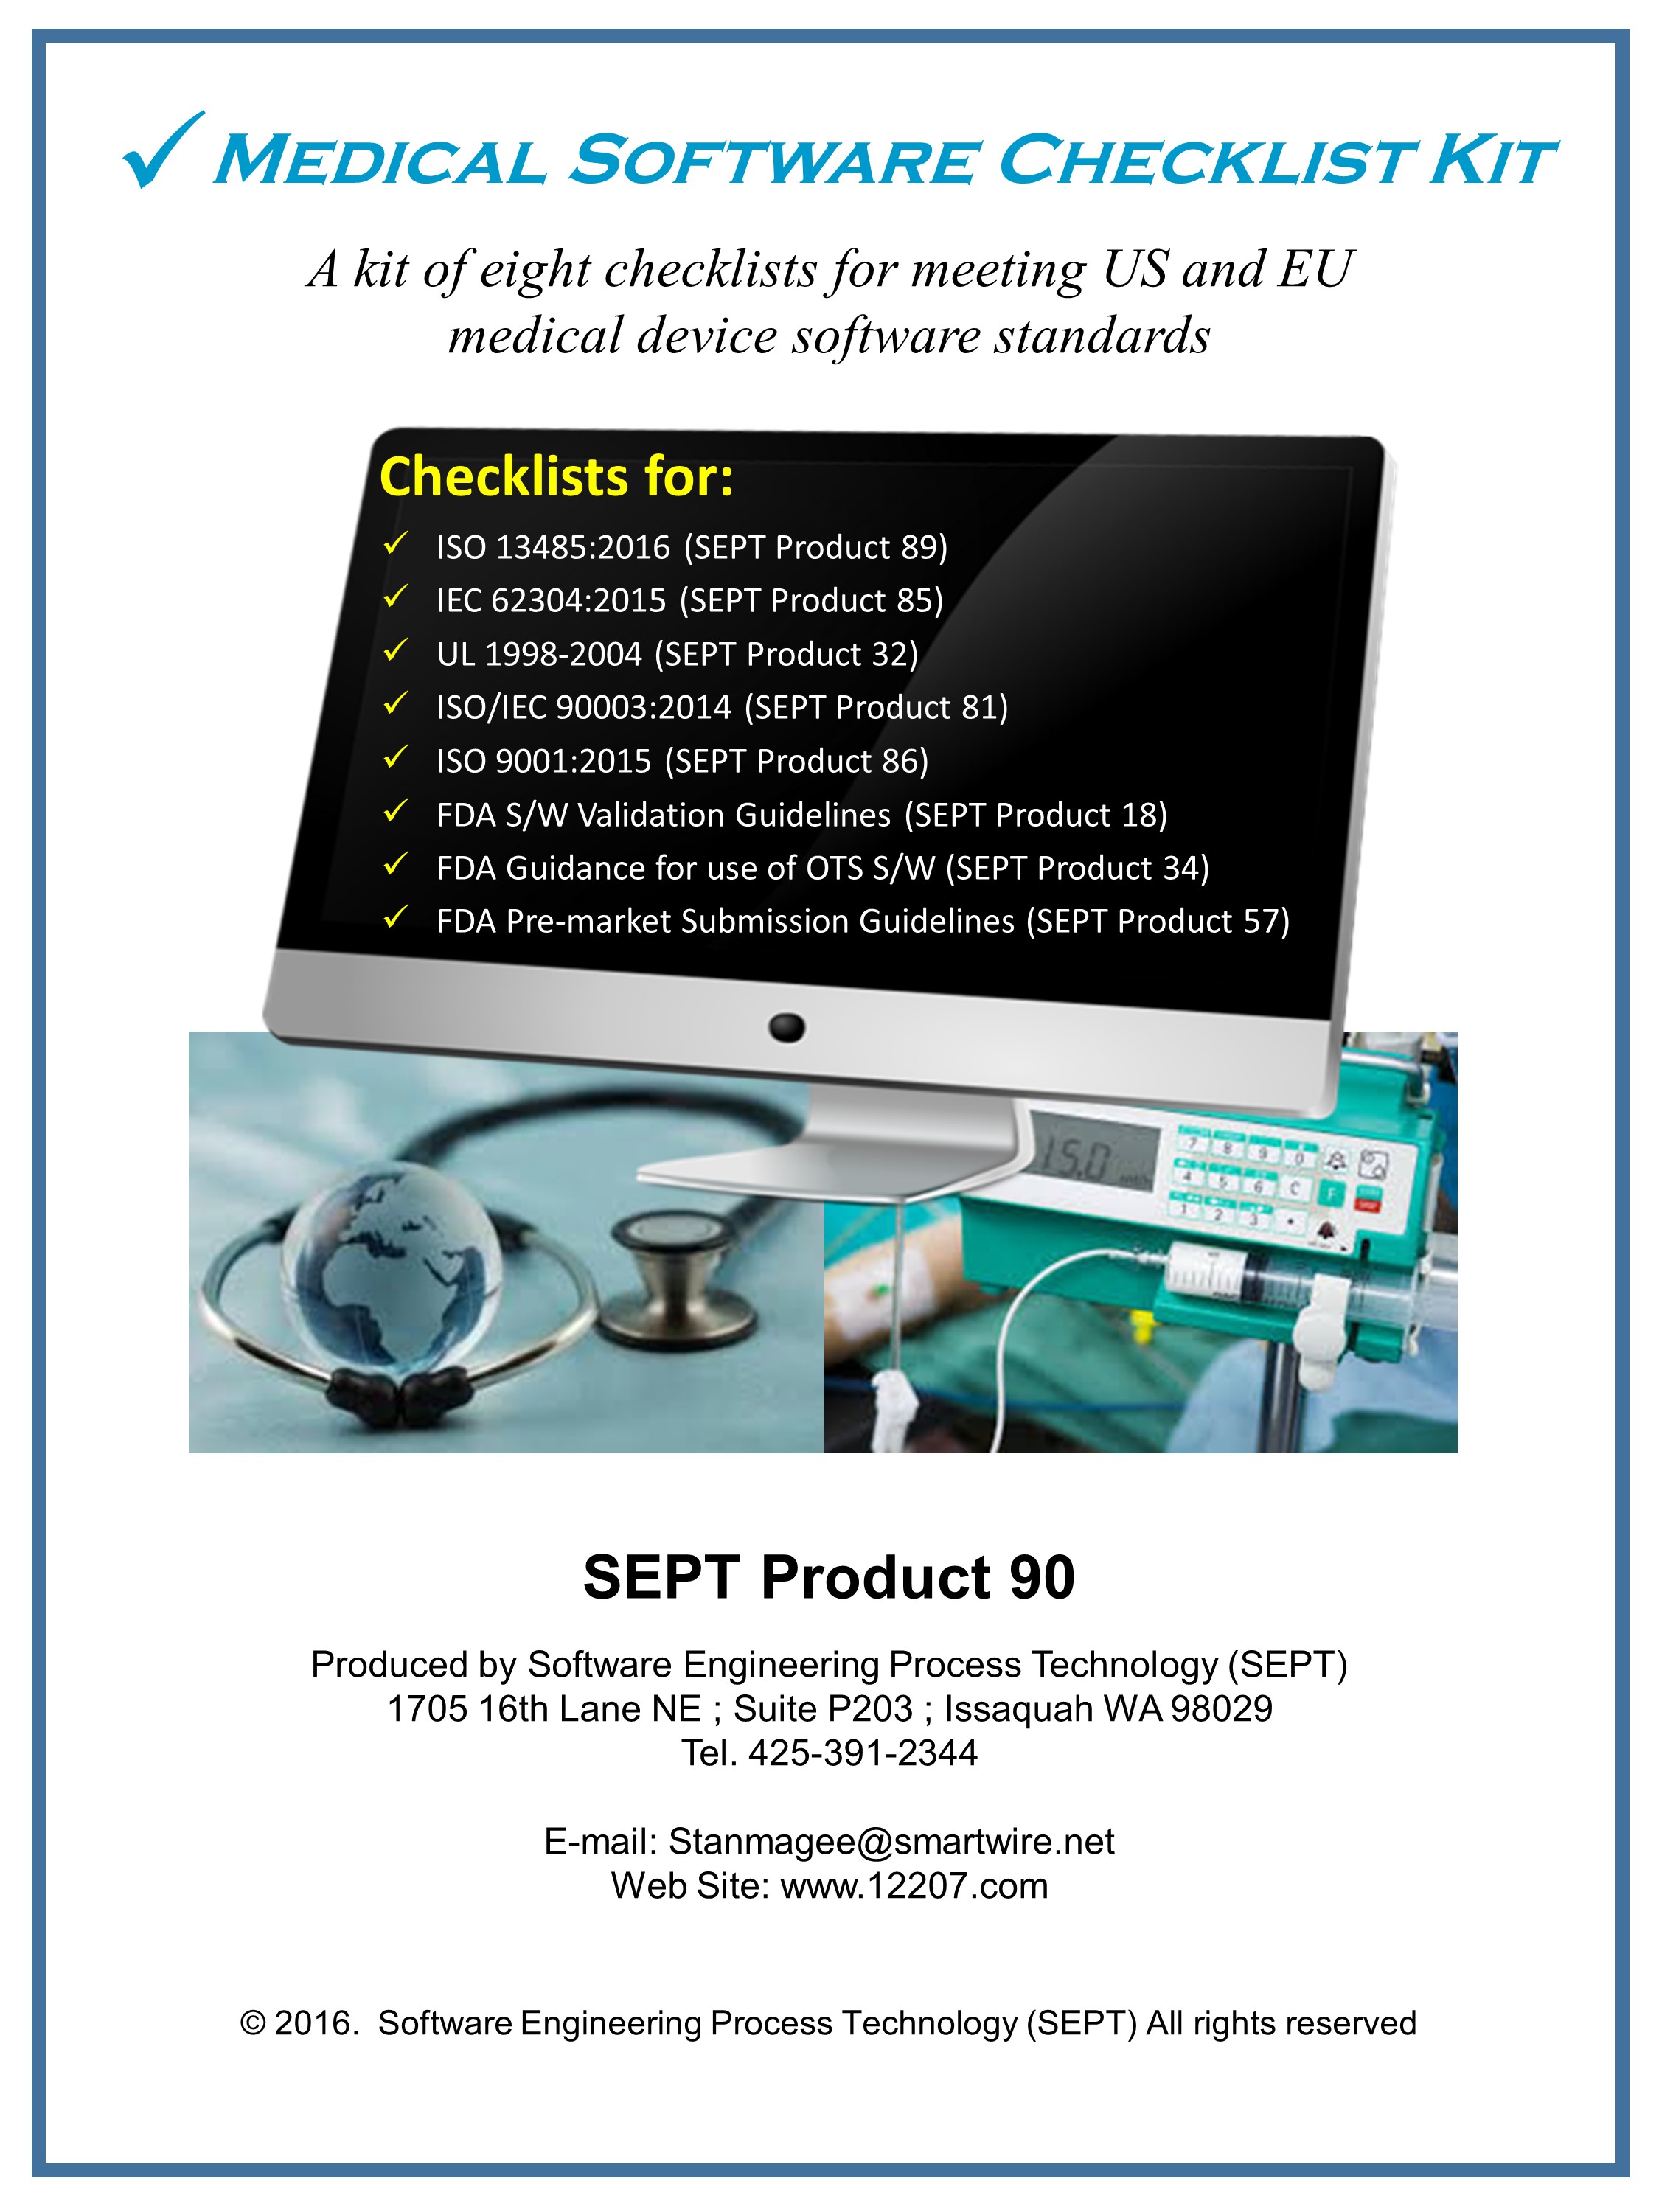 Medical Software Checklist Kit